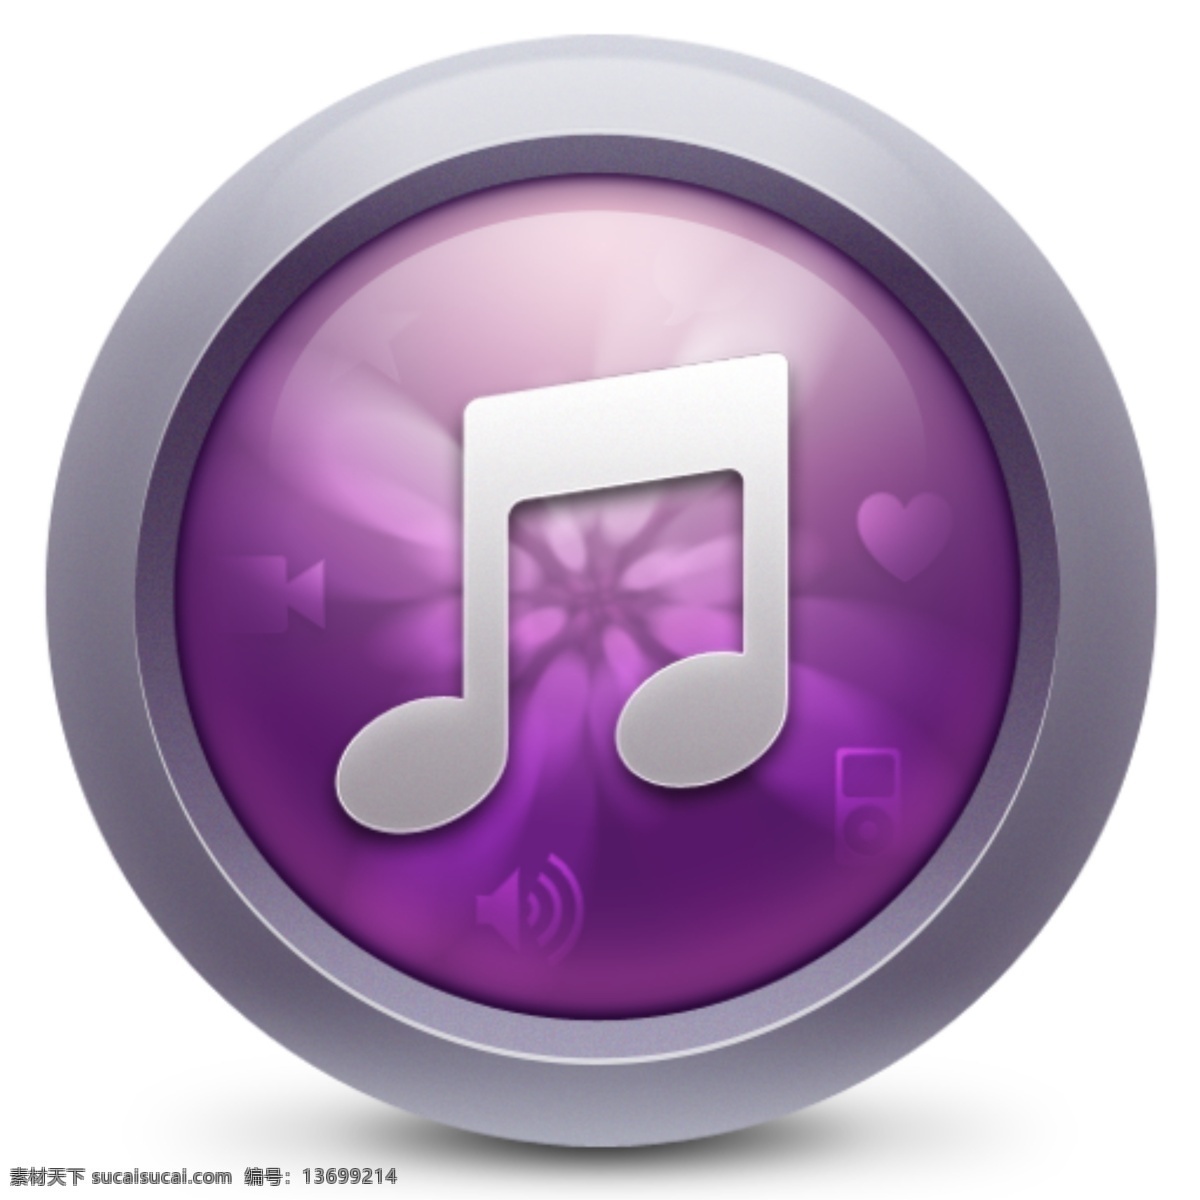 紫色 立体 金属 icon 图标 图标设计 icon设计 icon图标 网页图标 音乐图标 音乐图标设计 音乐icon 音乐 音乐素材 金属图标